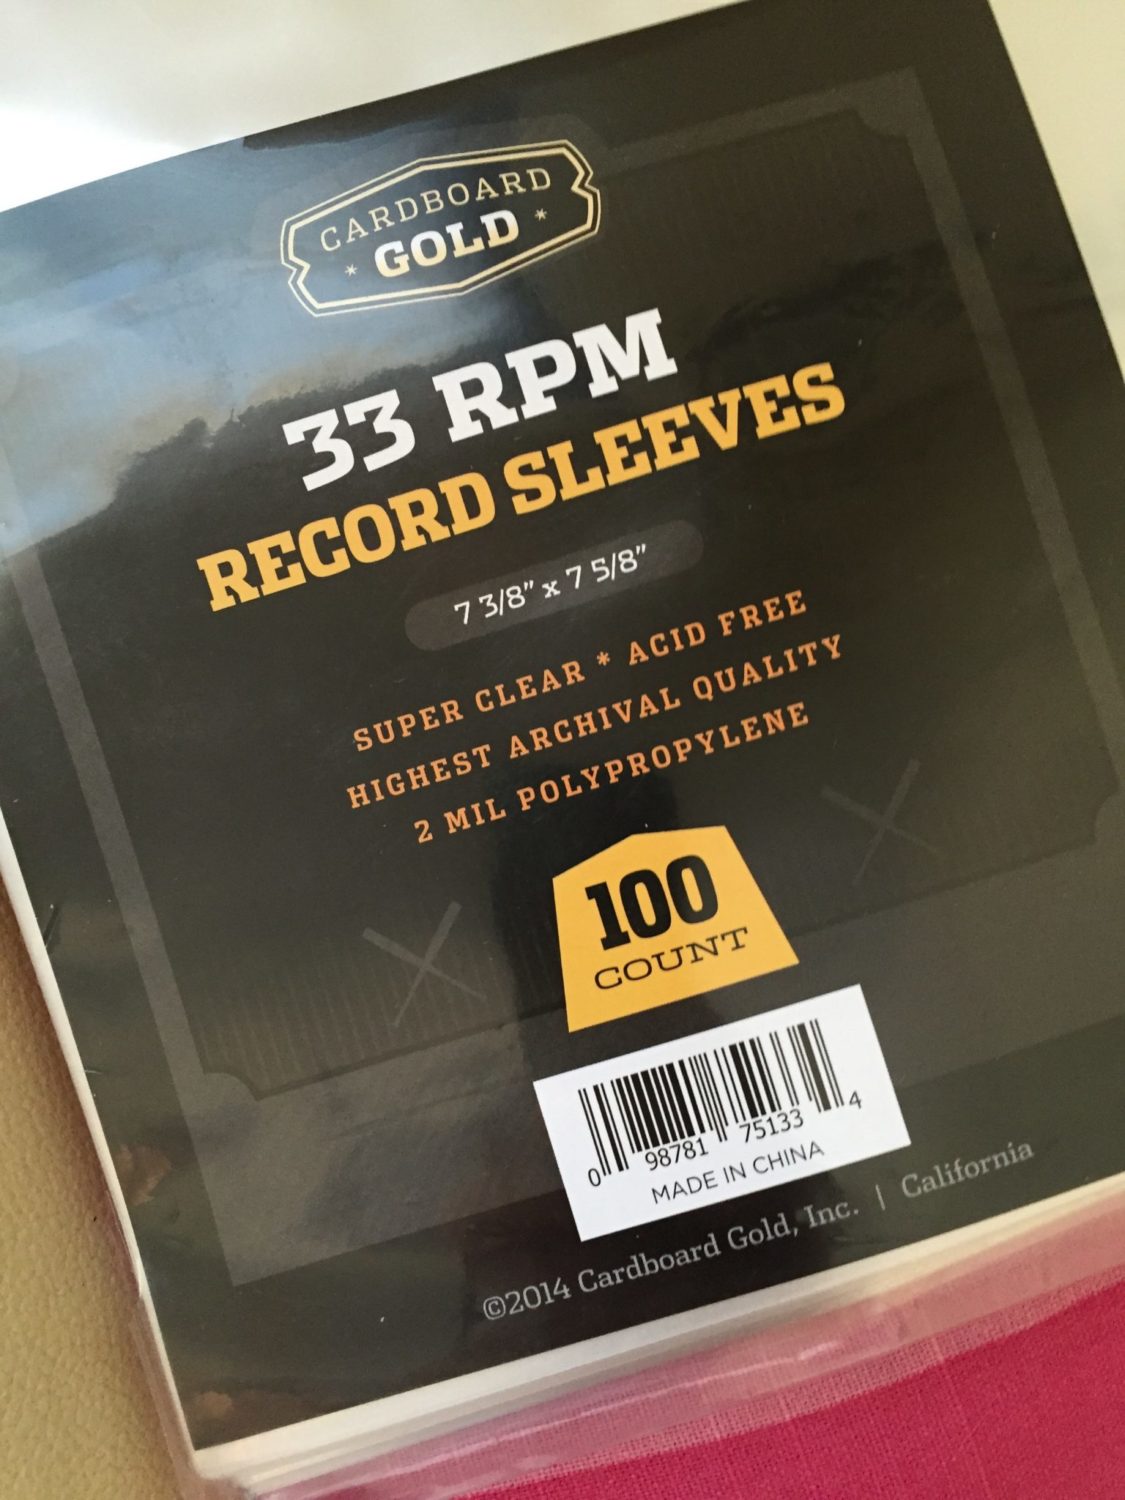 Polypropylene record sleeves